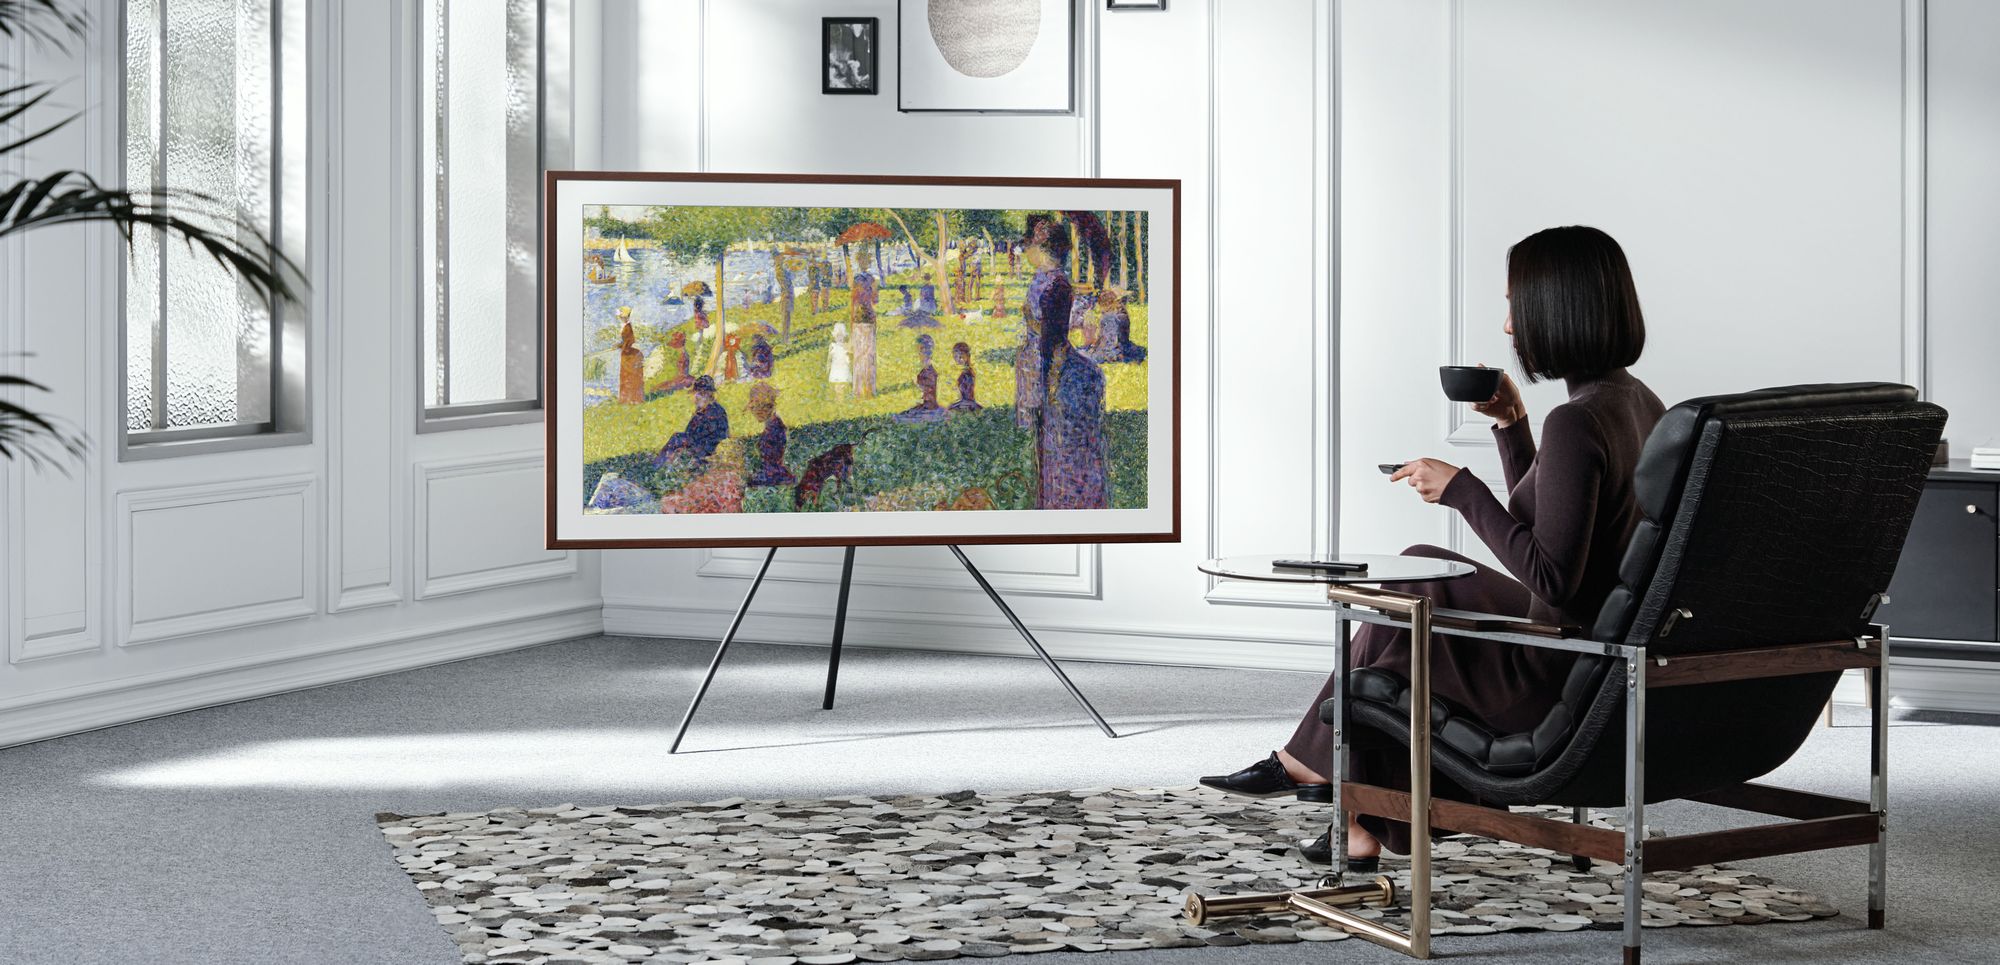 Samsung - telewizor - sztuka obsługi - Nowosciproduktowe.pl-1